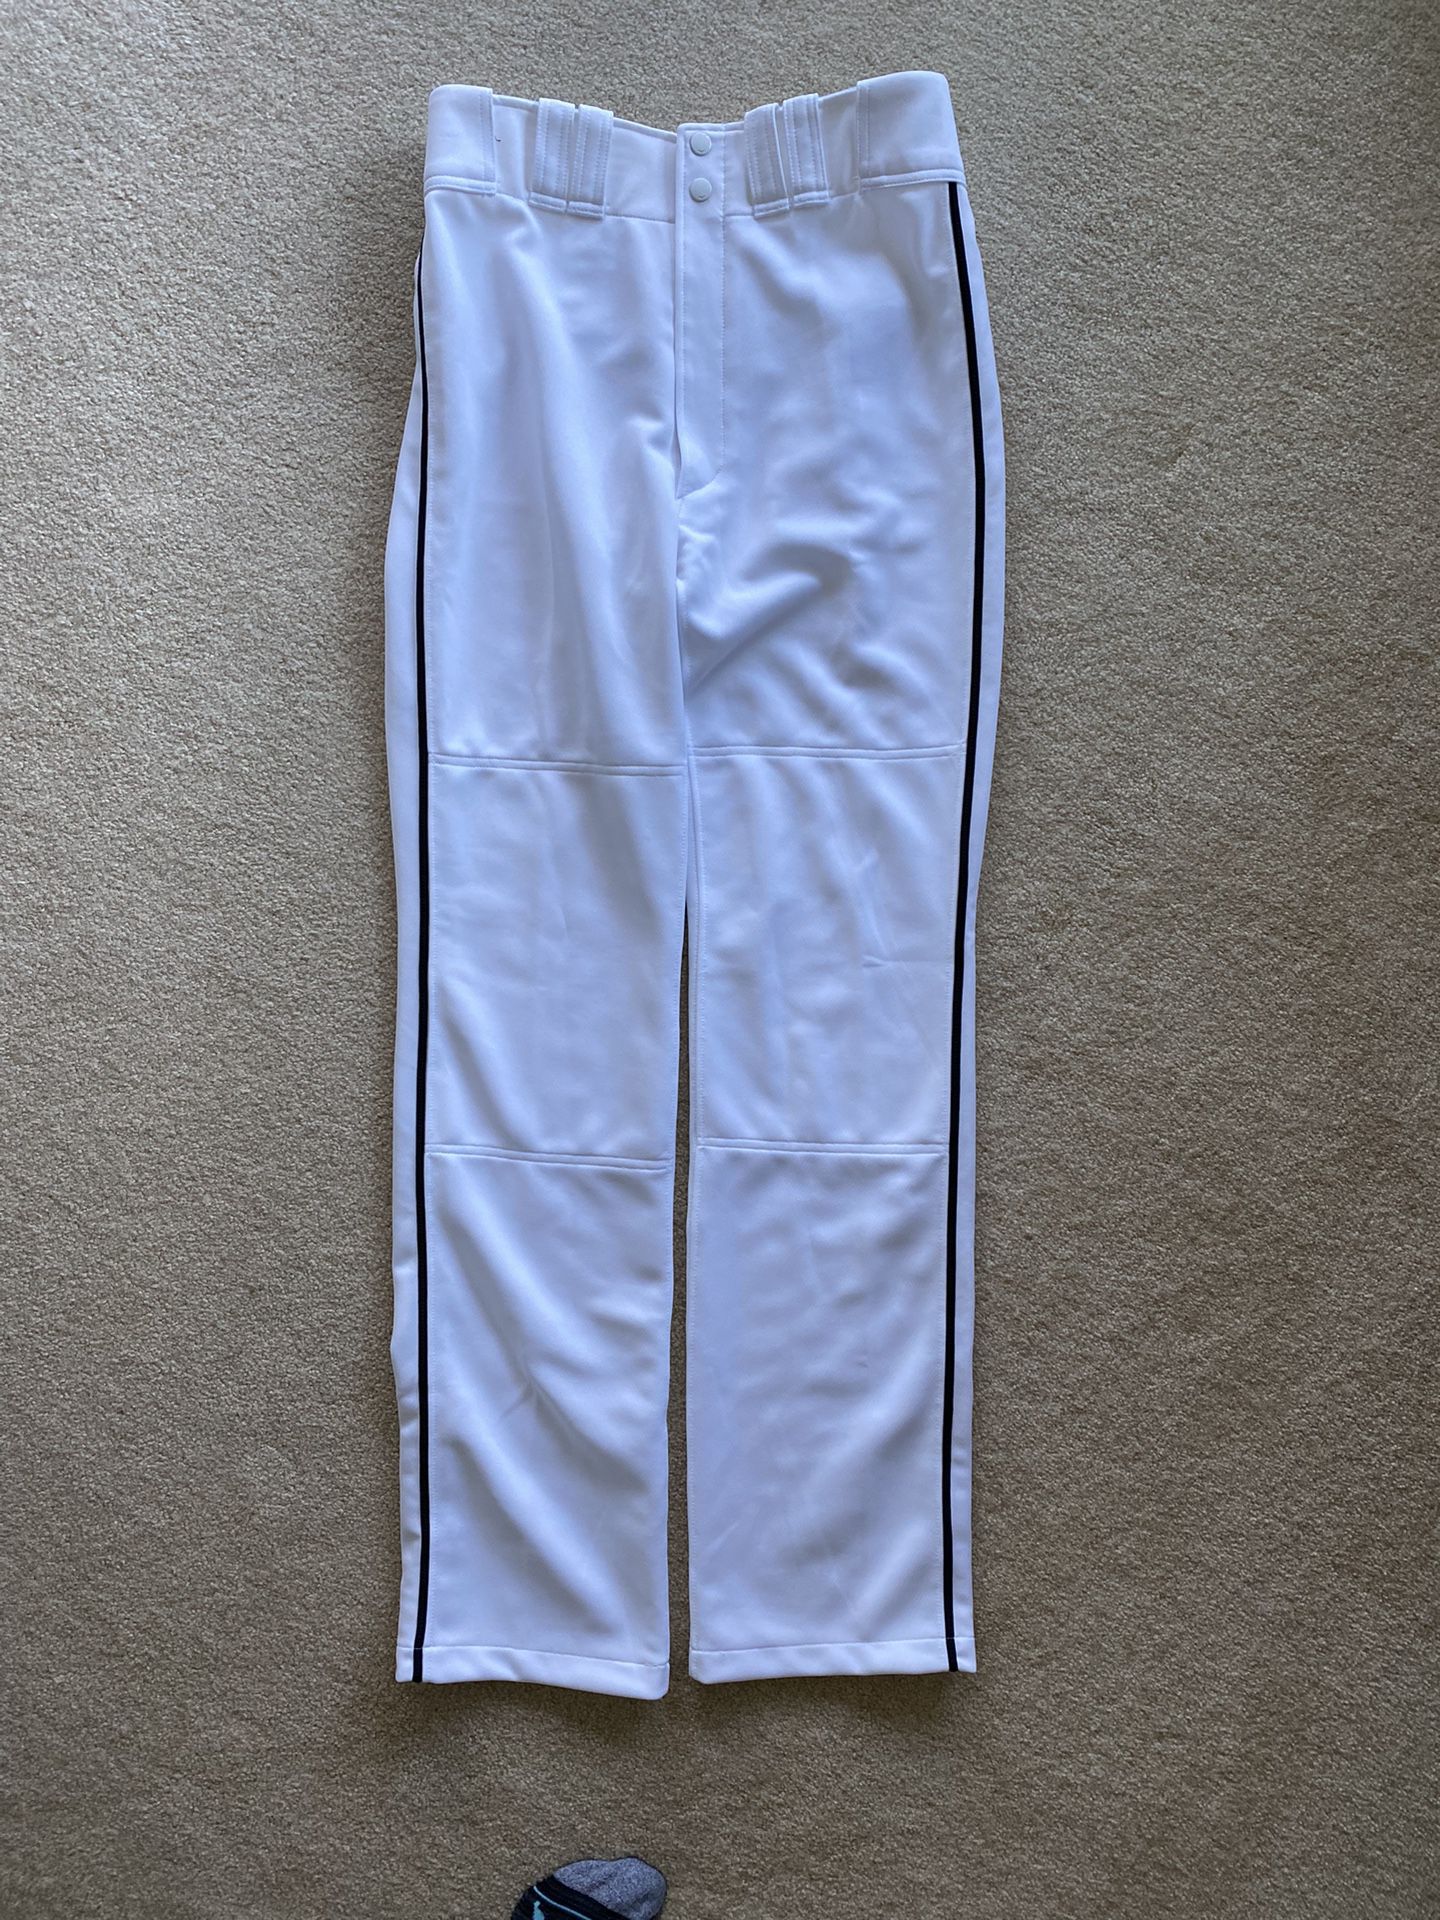 Mizuno Men’s  Medium Premier Pro Piped Baseball Pant G2 White/Black